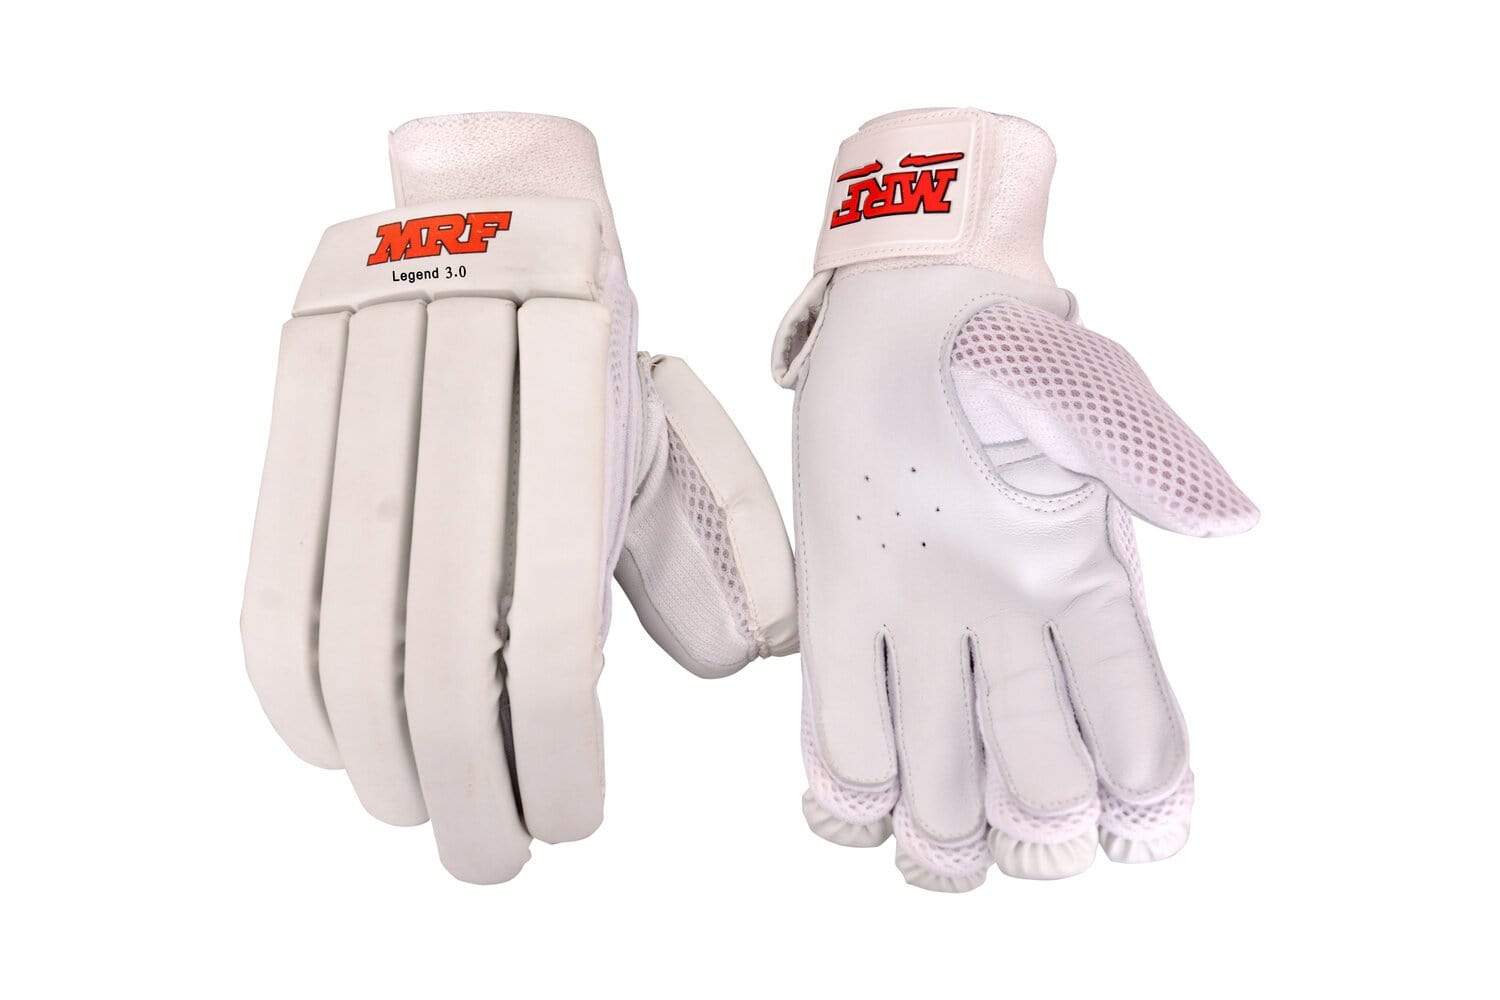 MRF Gloves MRF Legend VK 3.0 Cricket Batting Gloves